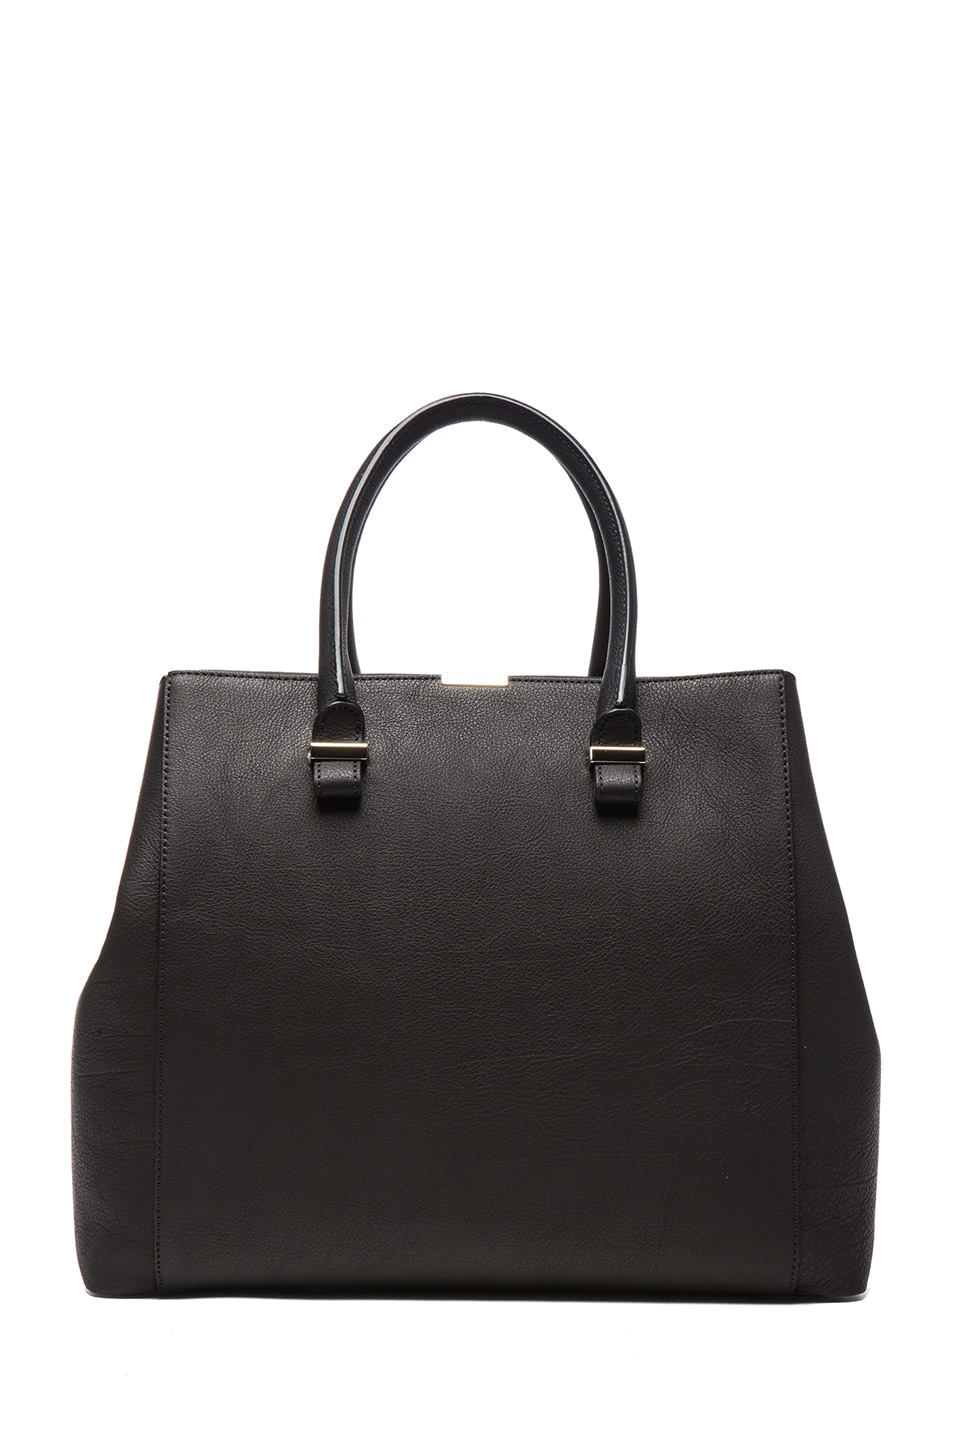 Image 1 of Victoria Beckham Liberty Bag in Black & Powder